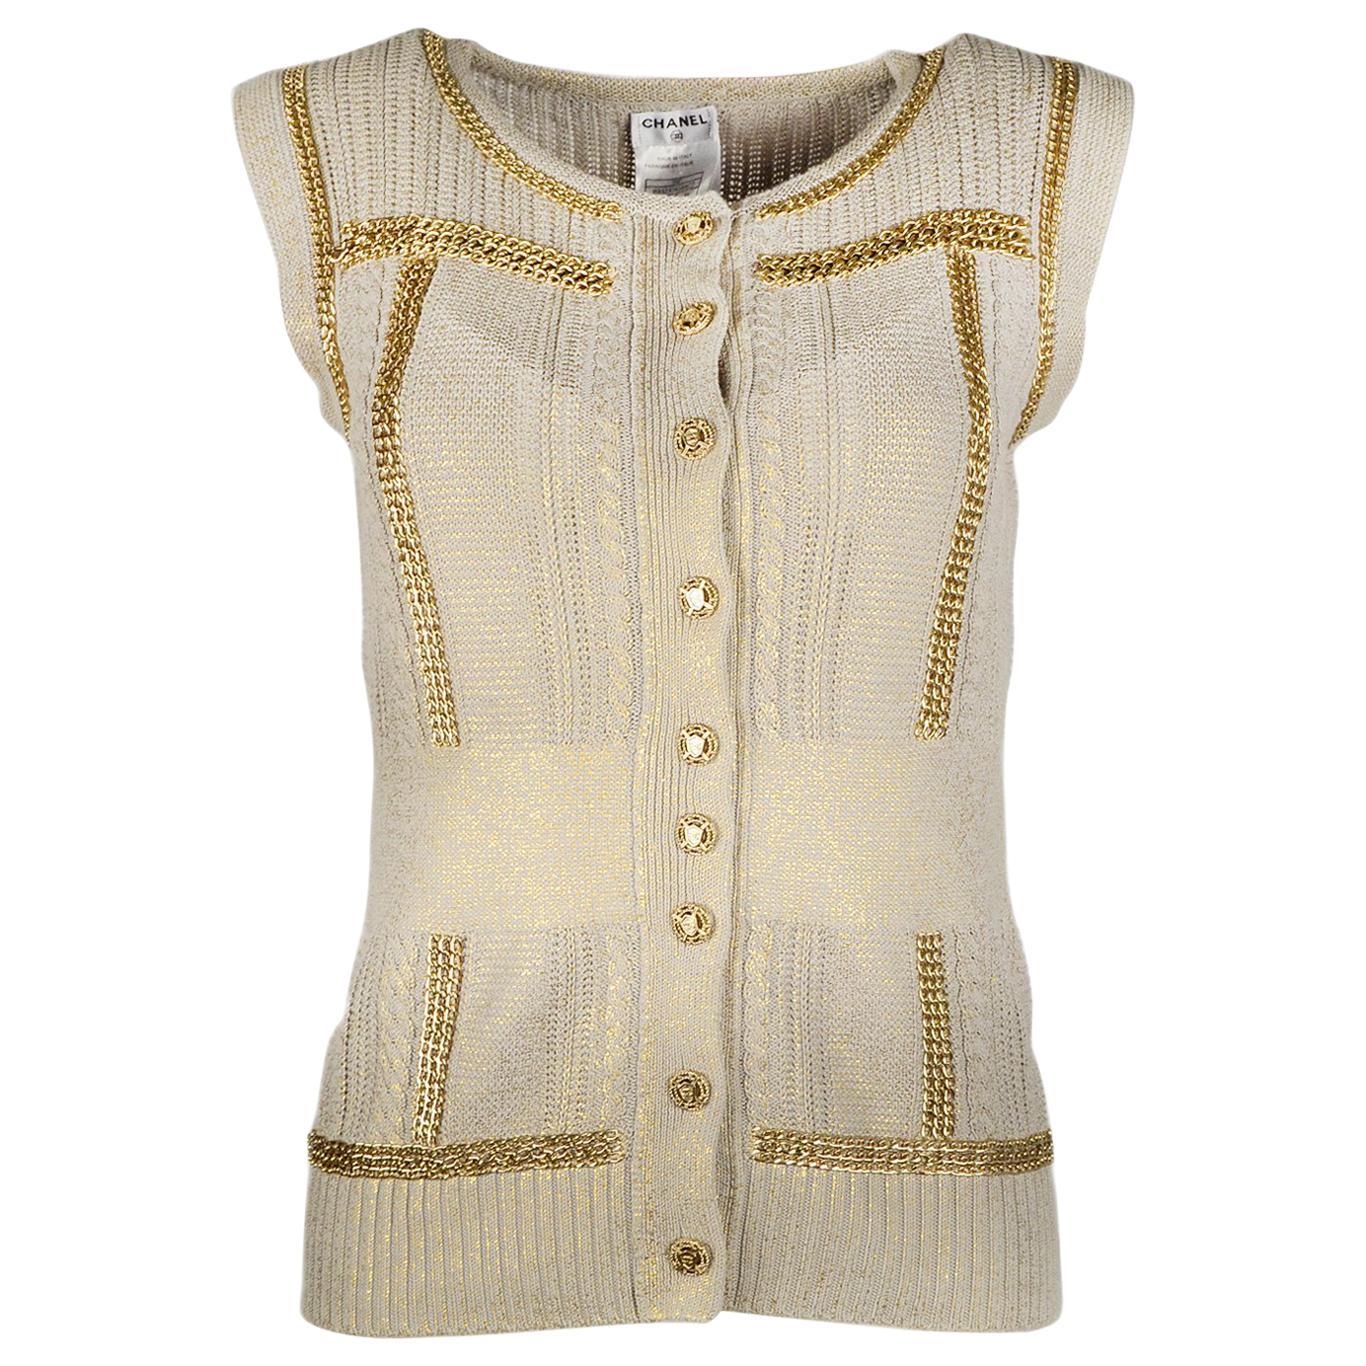 Chanel Grey/Gold Metallic Knit Vest W/ Chain Detailing & CC Shield Buttons Sz 38